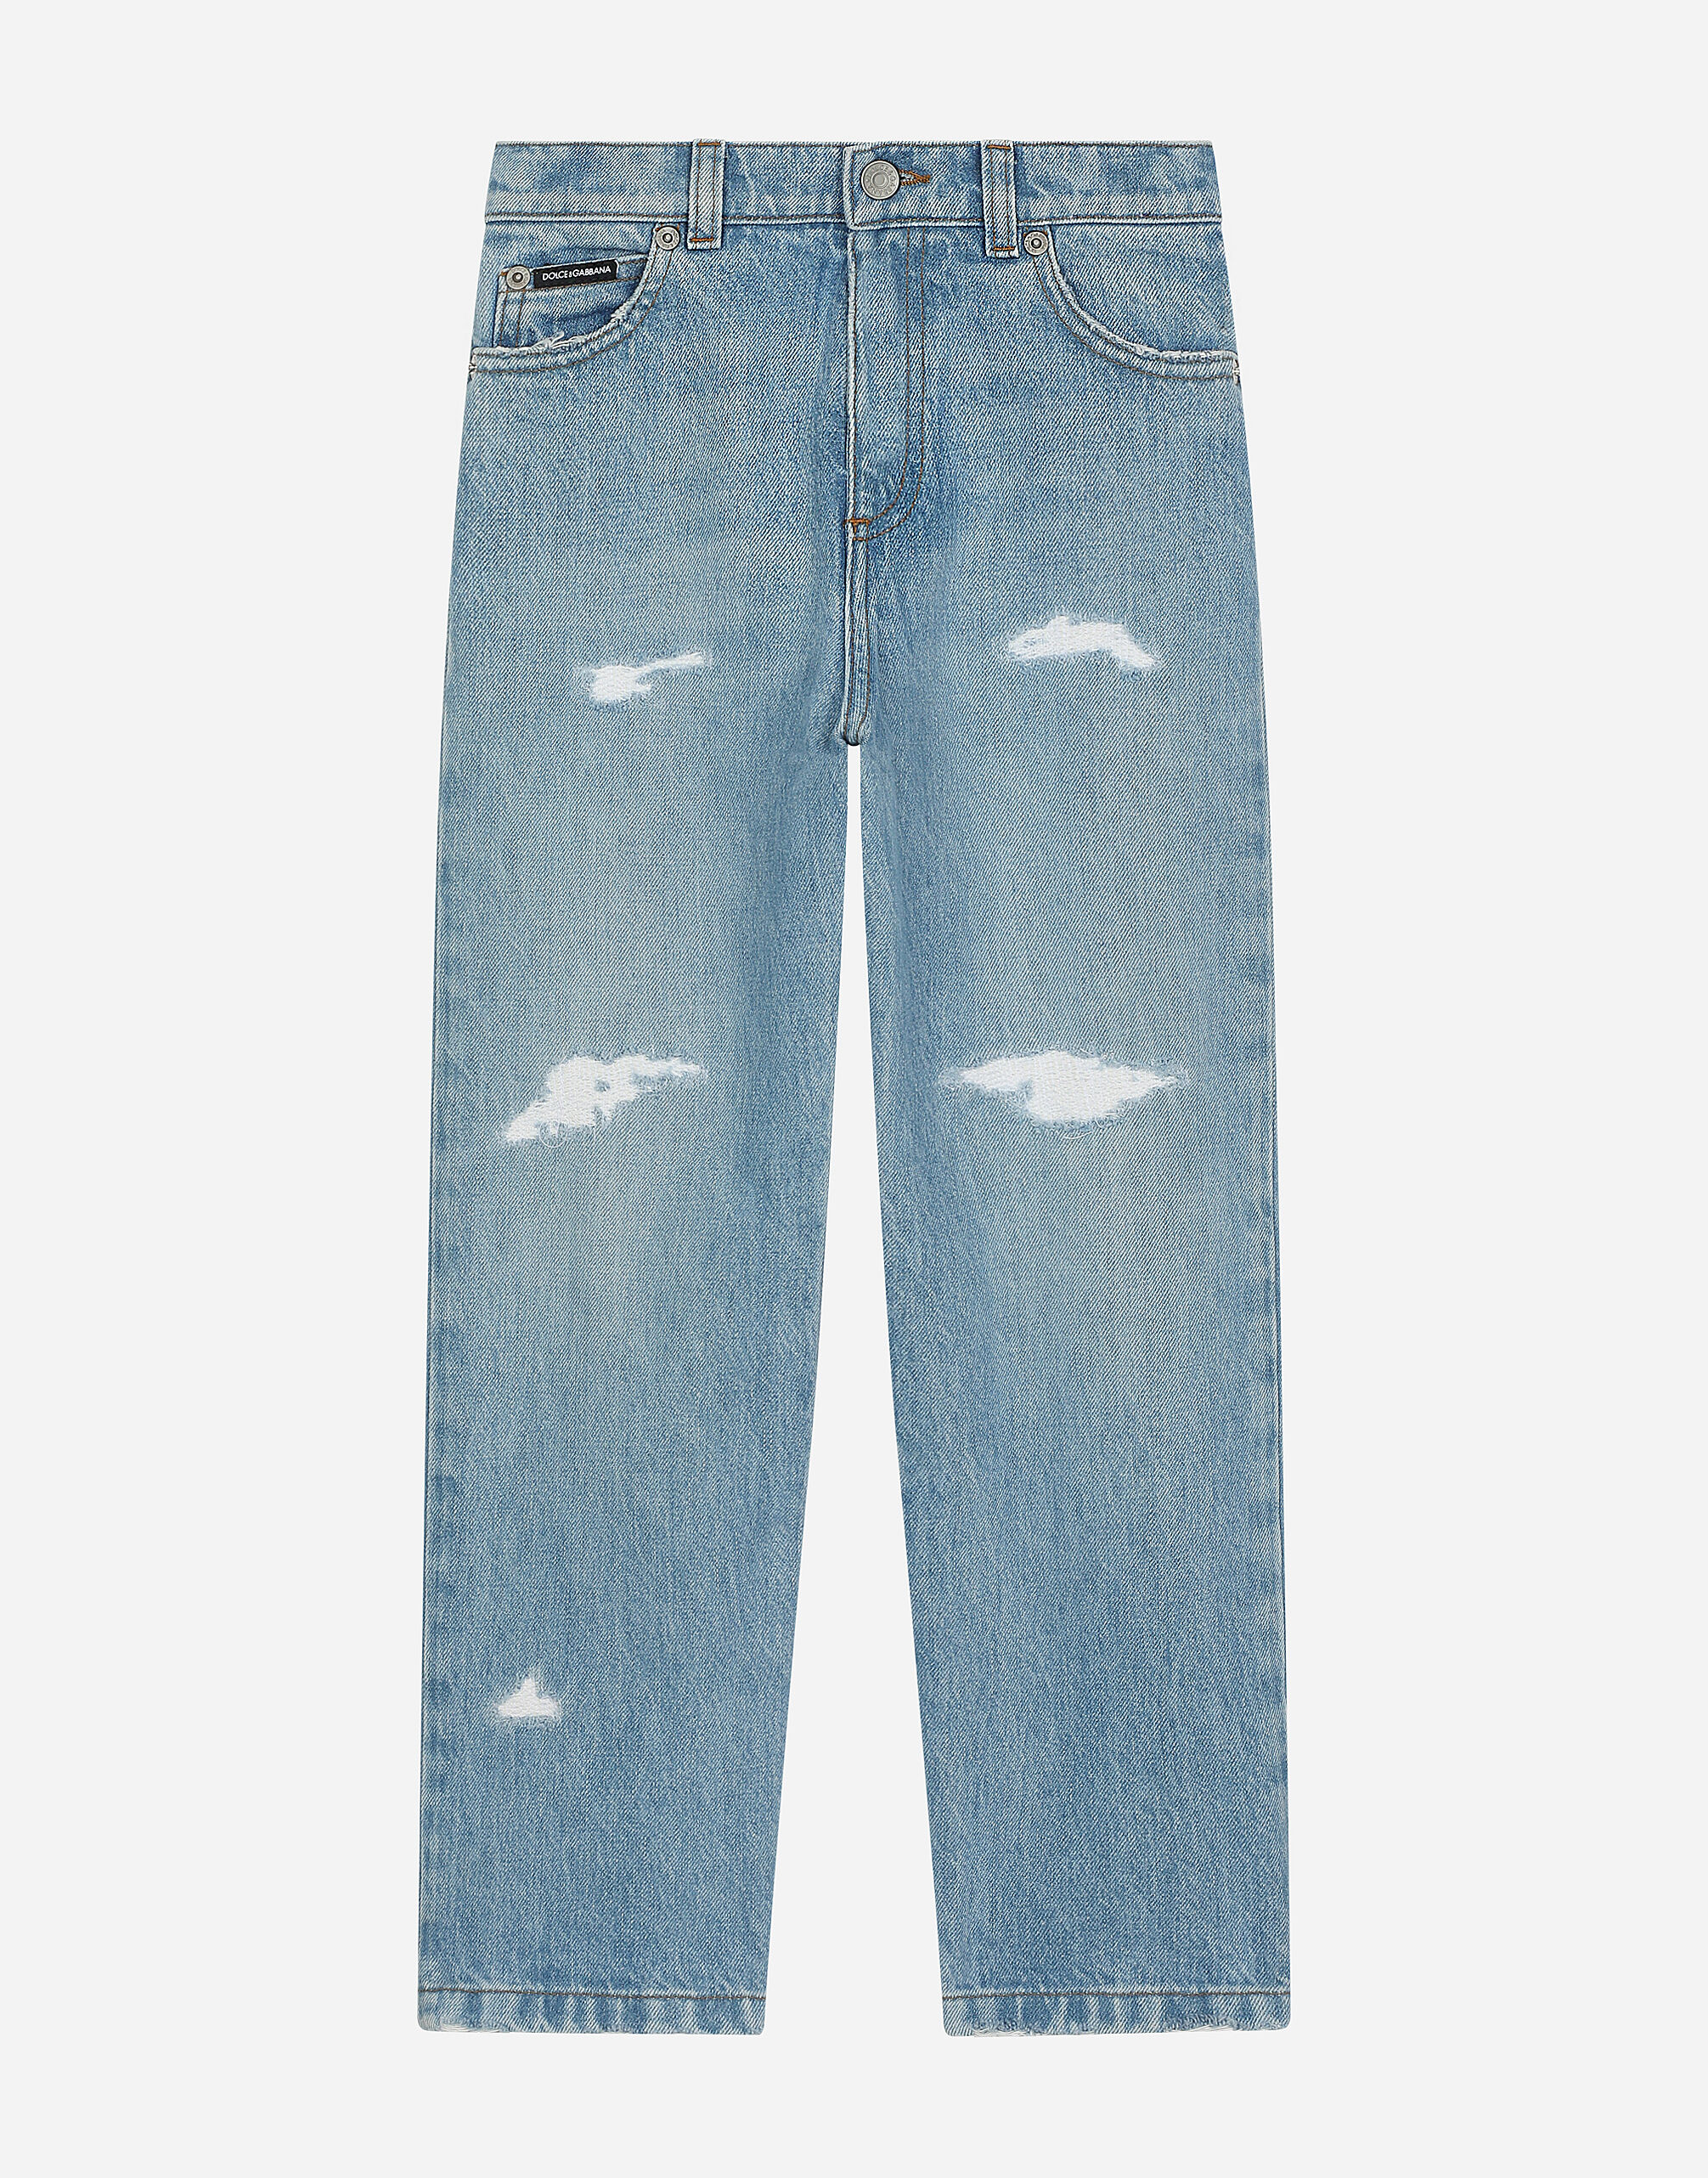 Dolce & Gabbana 5-pocket denim jeans with logo tag Beige L44S02G7NWR